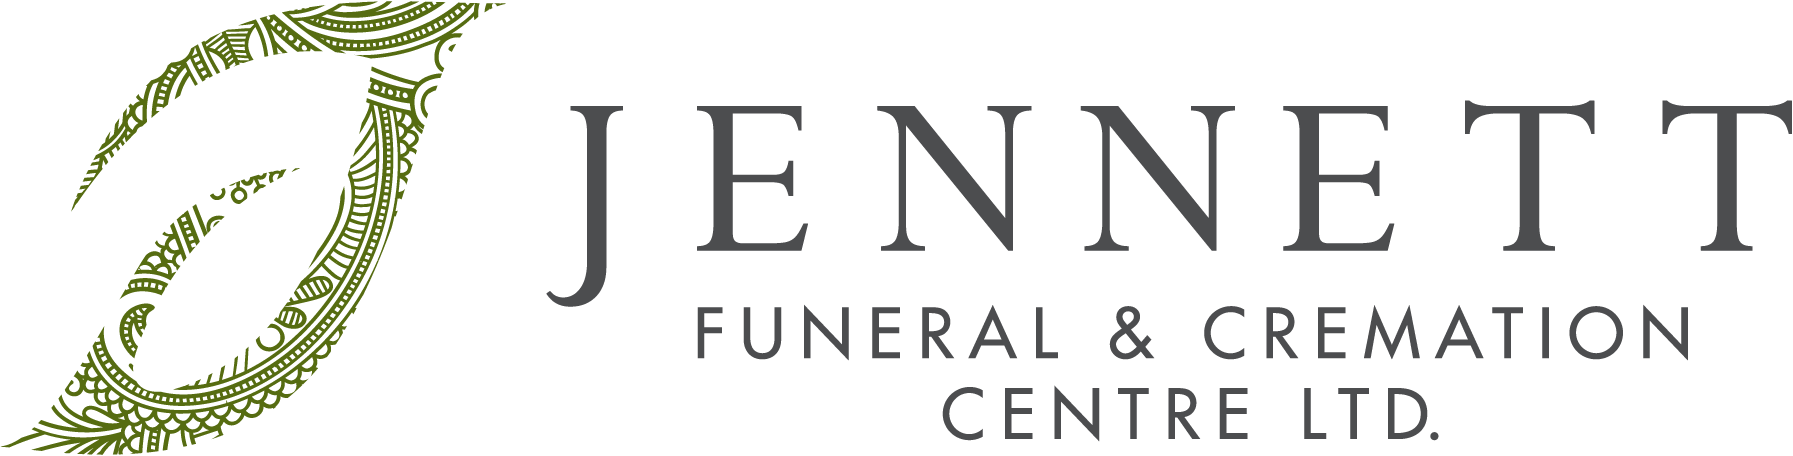 Jennett Funeral & Cremation Centre Ltd.